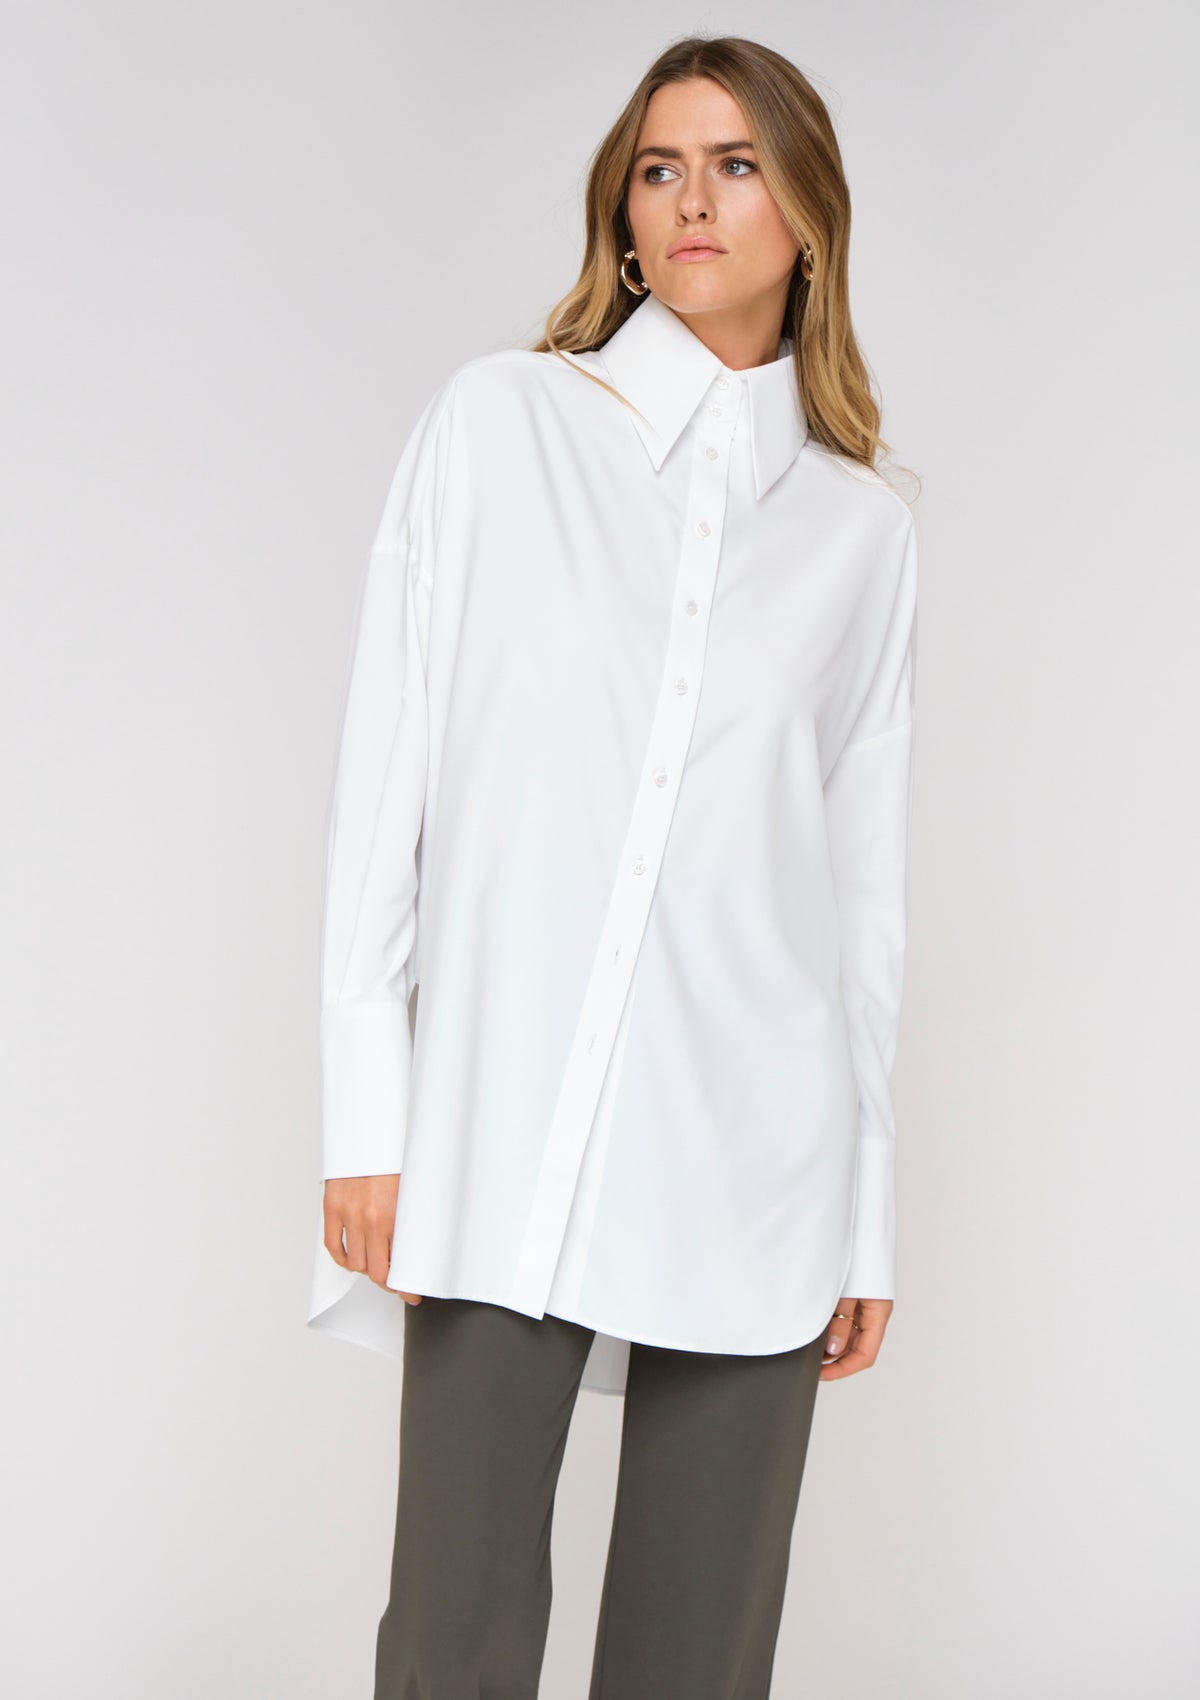 ONYX Shirt white